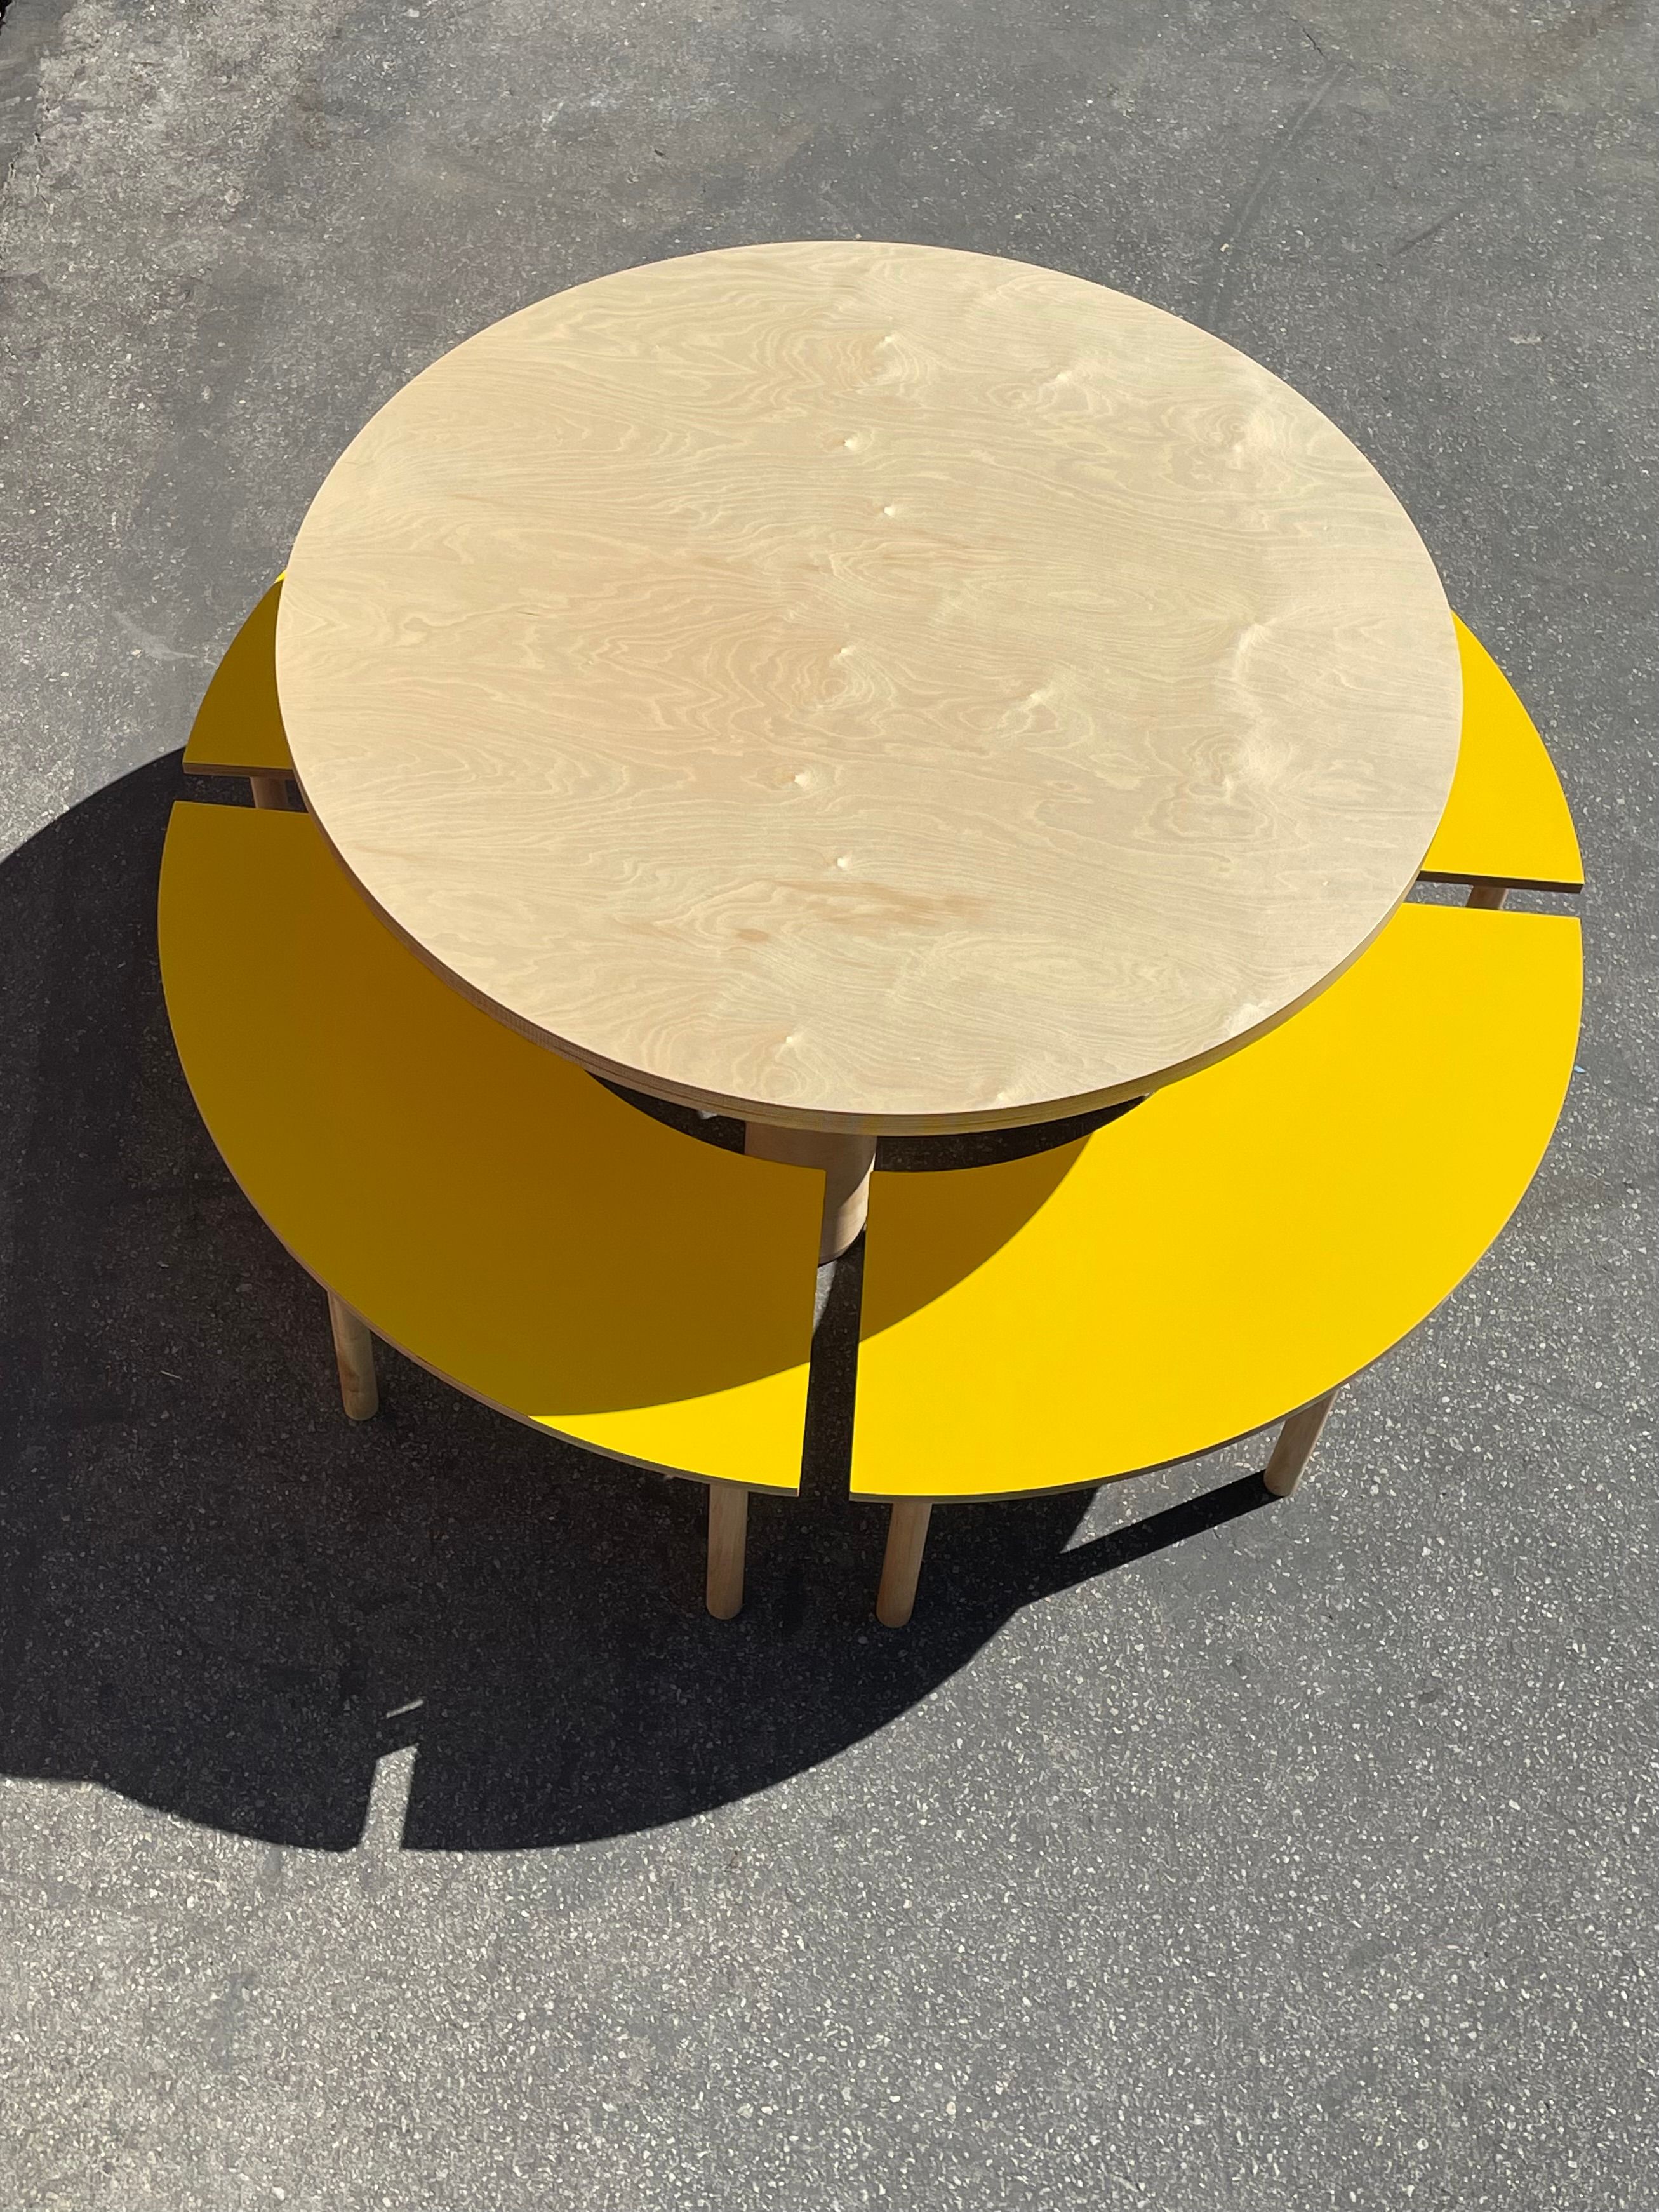  Circle Table + Bench Set II product image 2